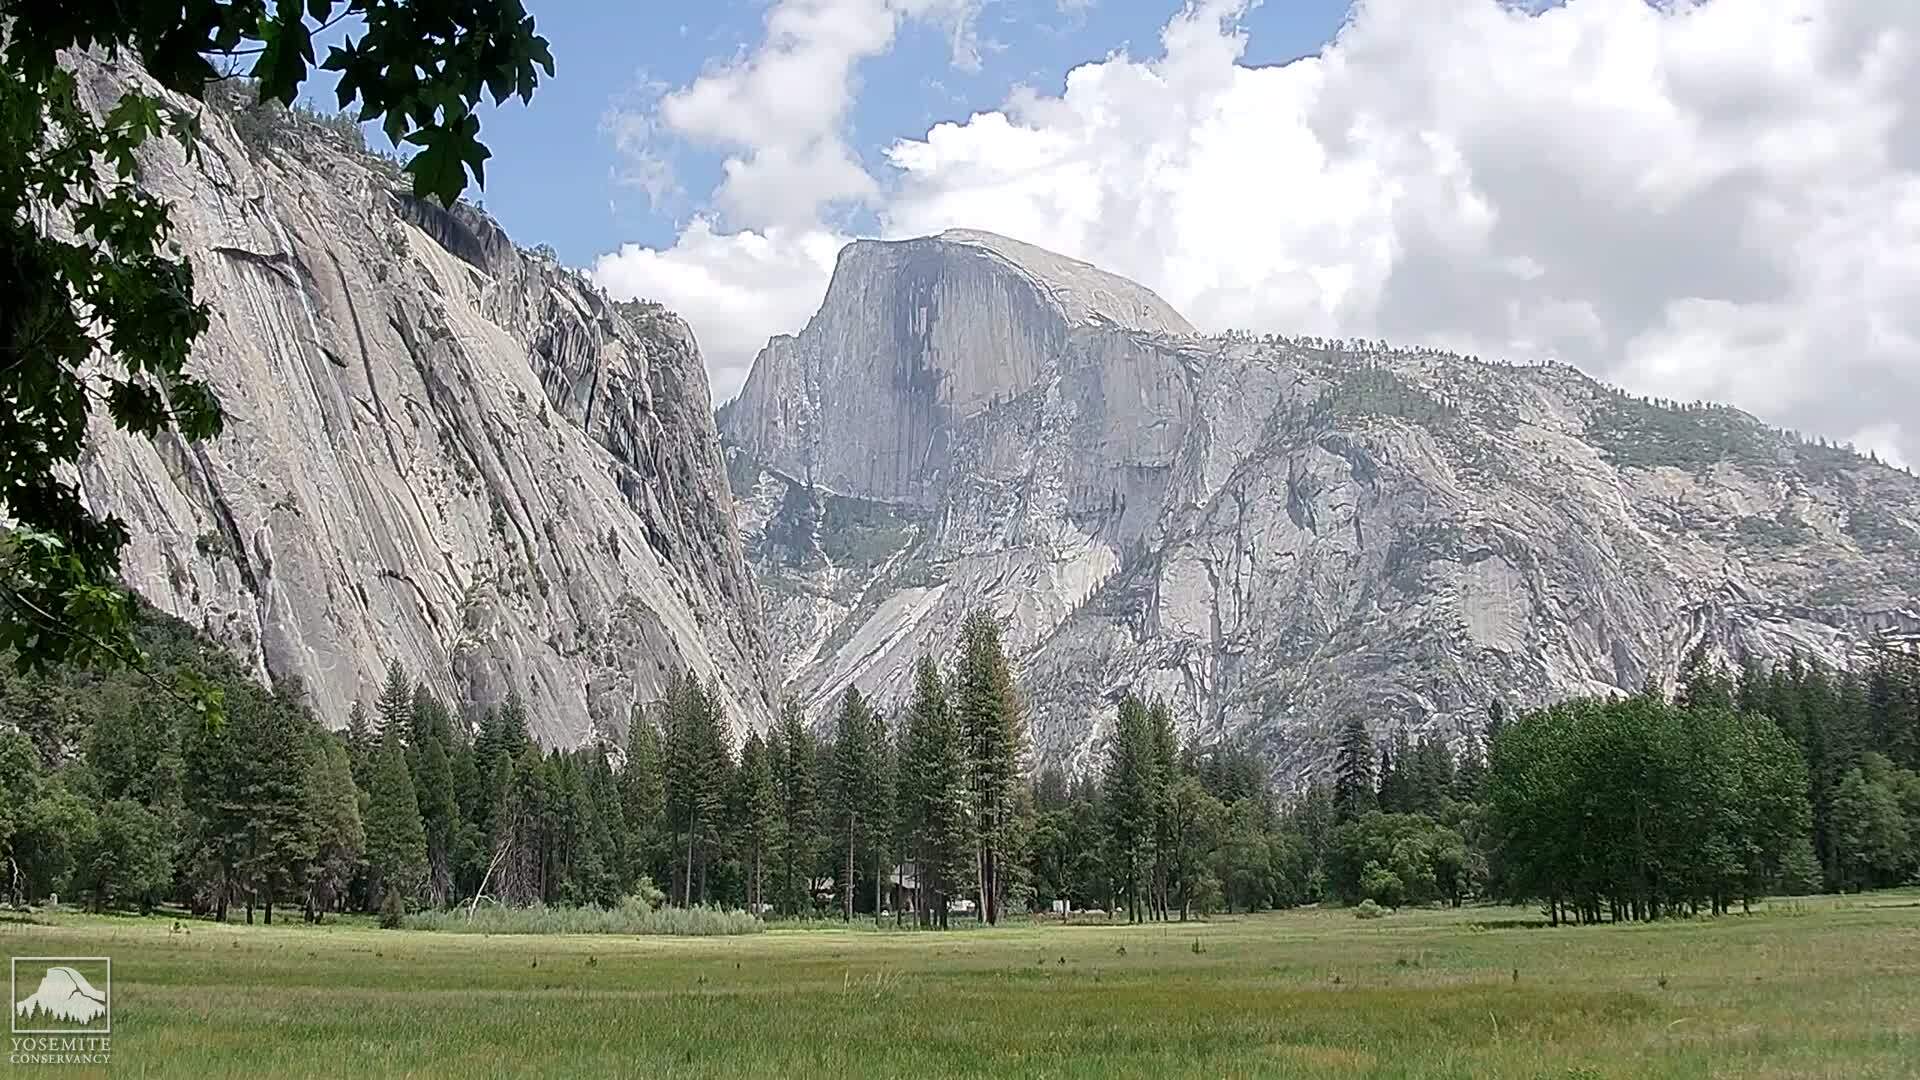 Yosemite National Park, Californie Me. 13:45